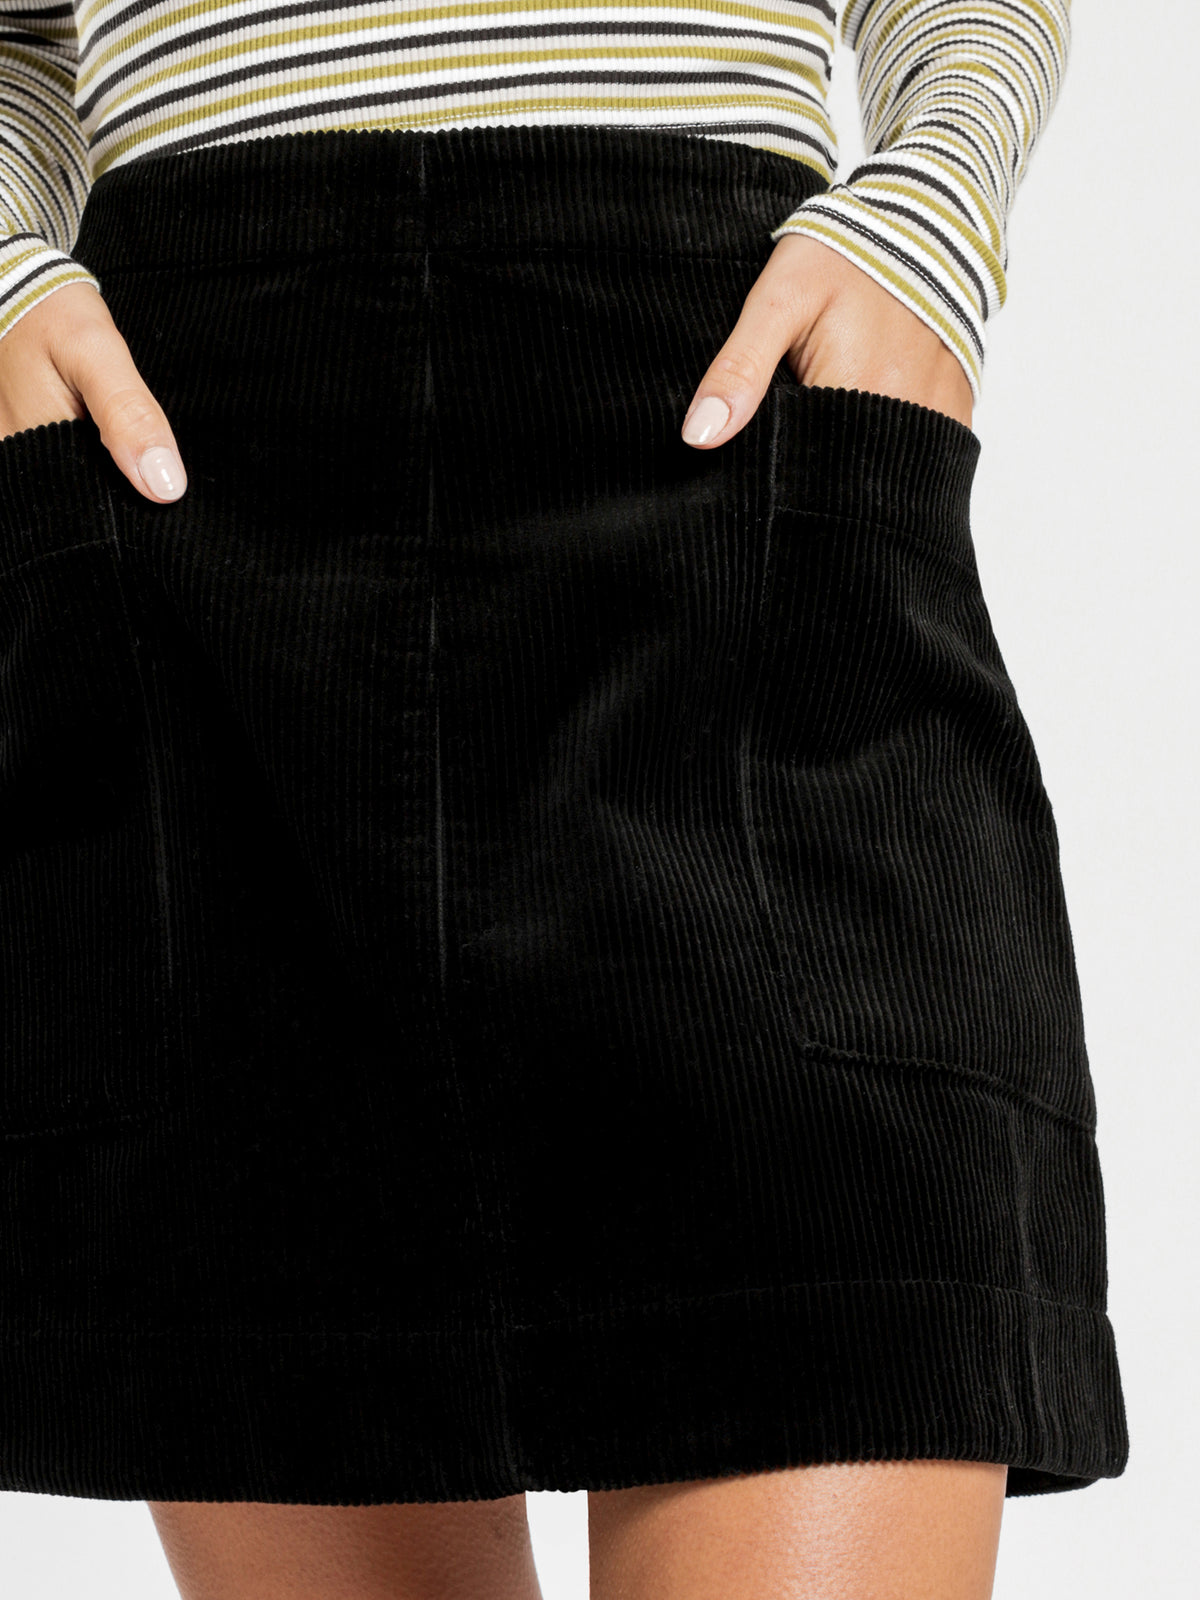 Corduroy Mini Skirt in Black